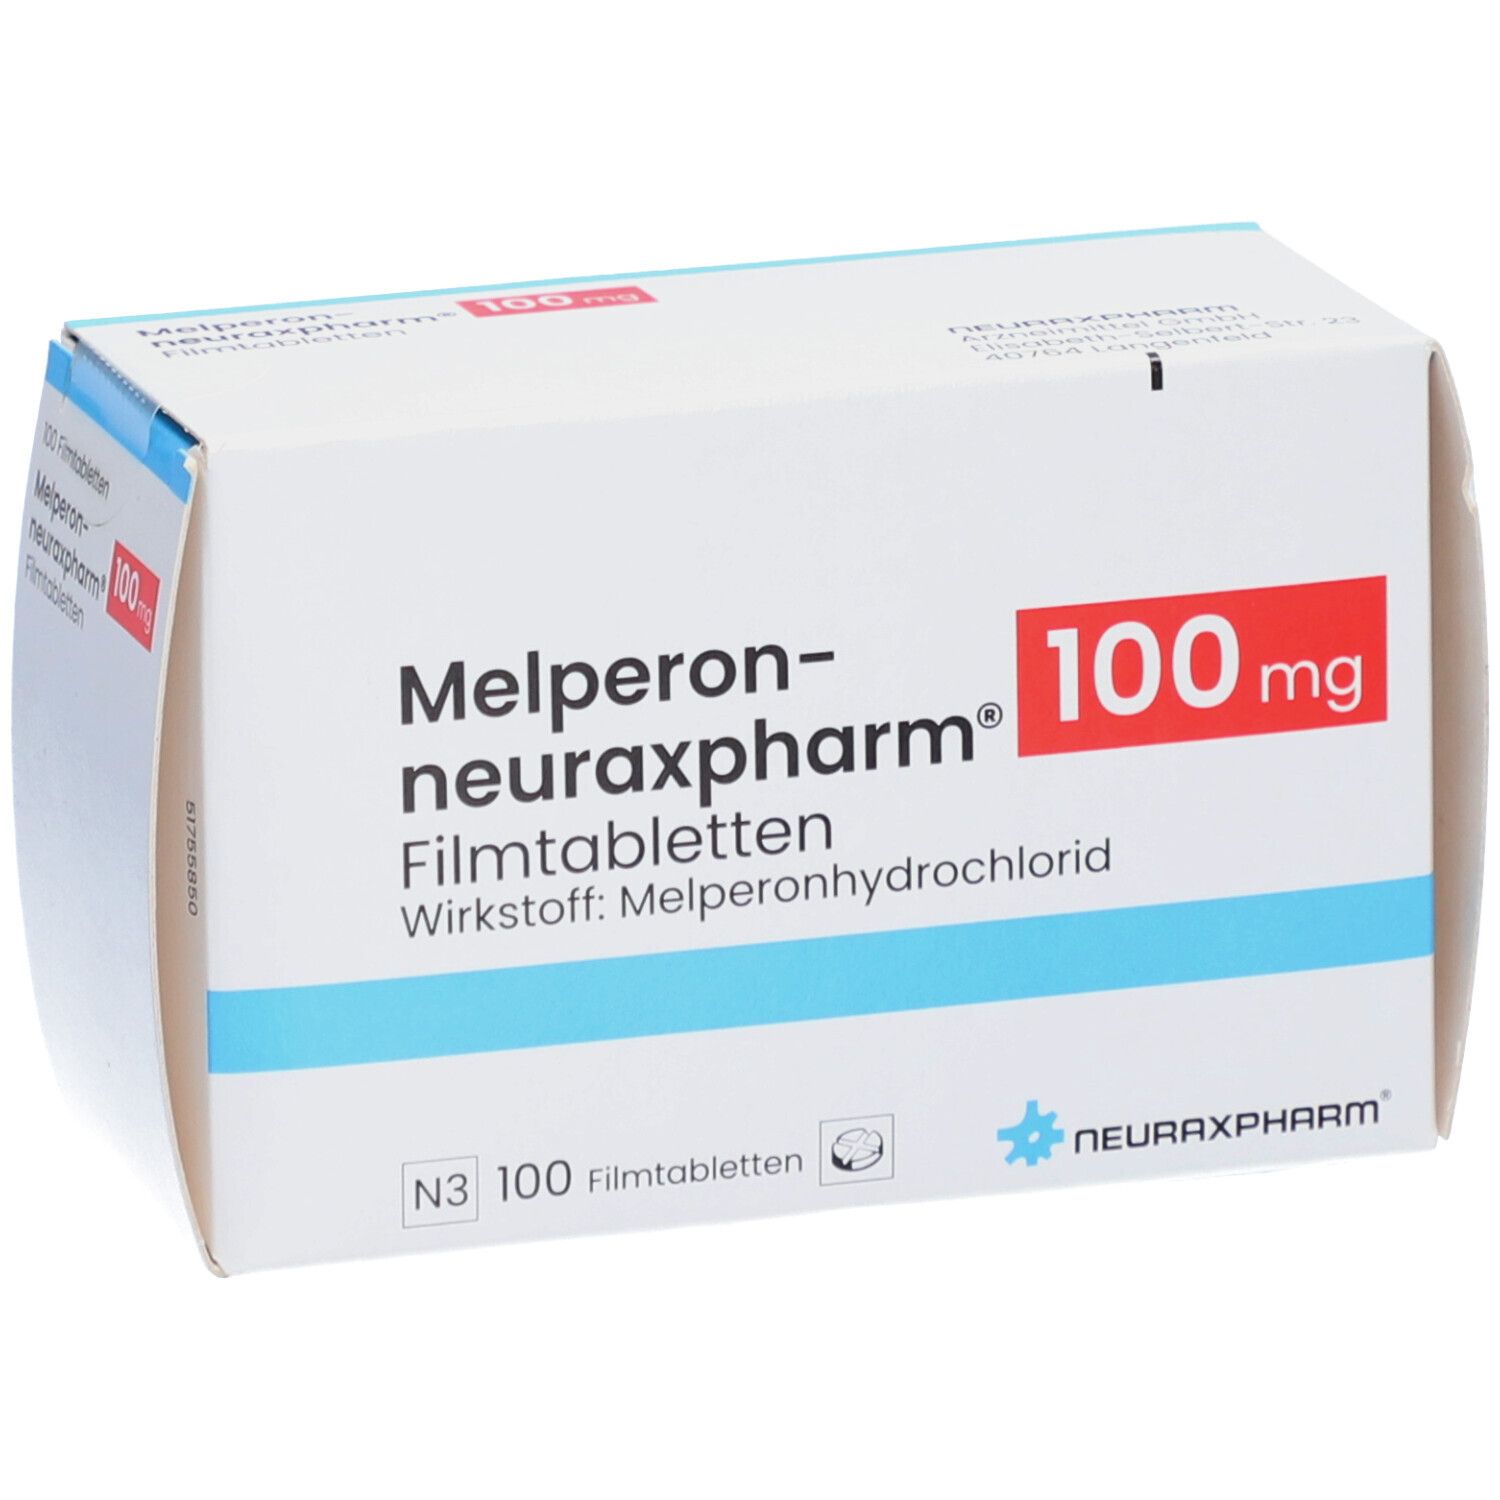 Melperon-neuraxpharm® 100 mg